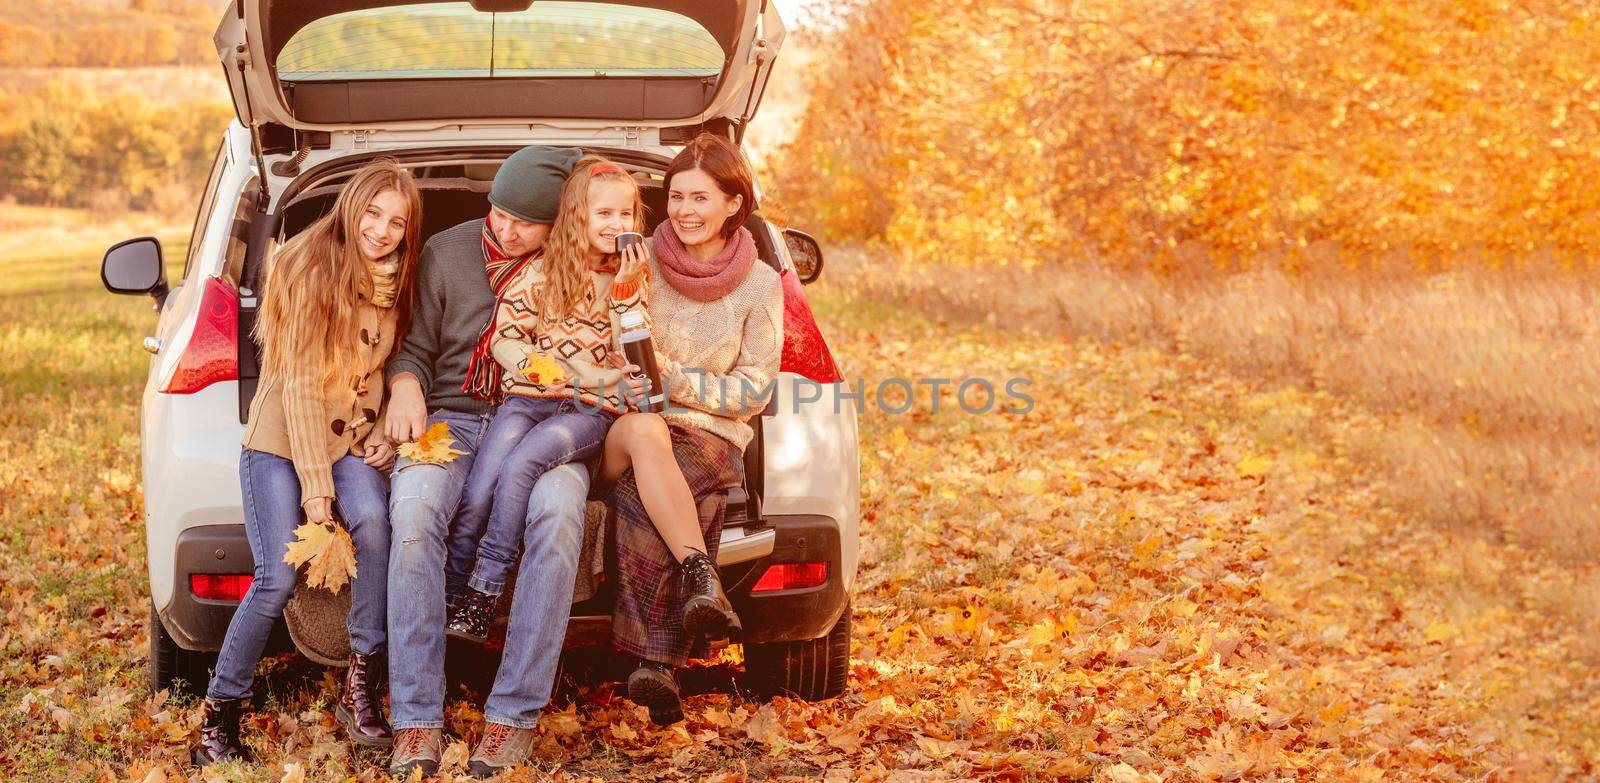 Family resting in car trunk by tan4ikk1